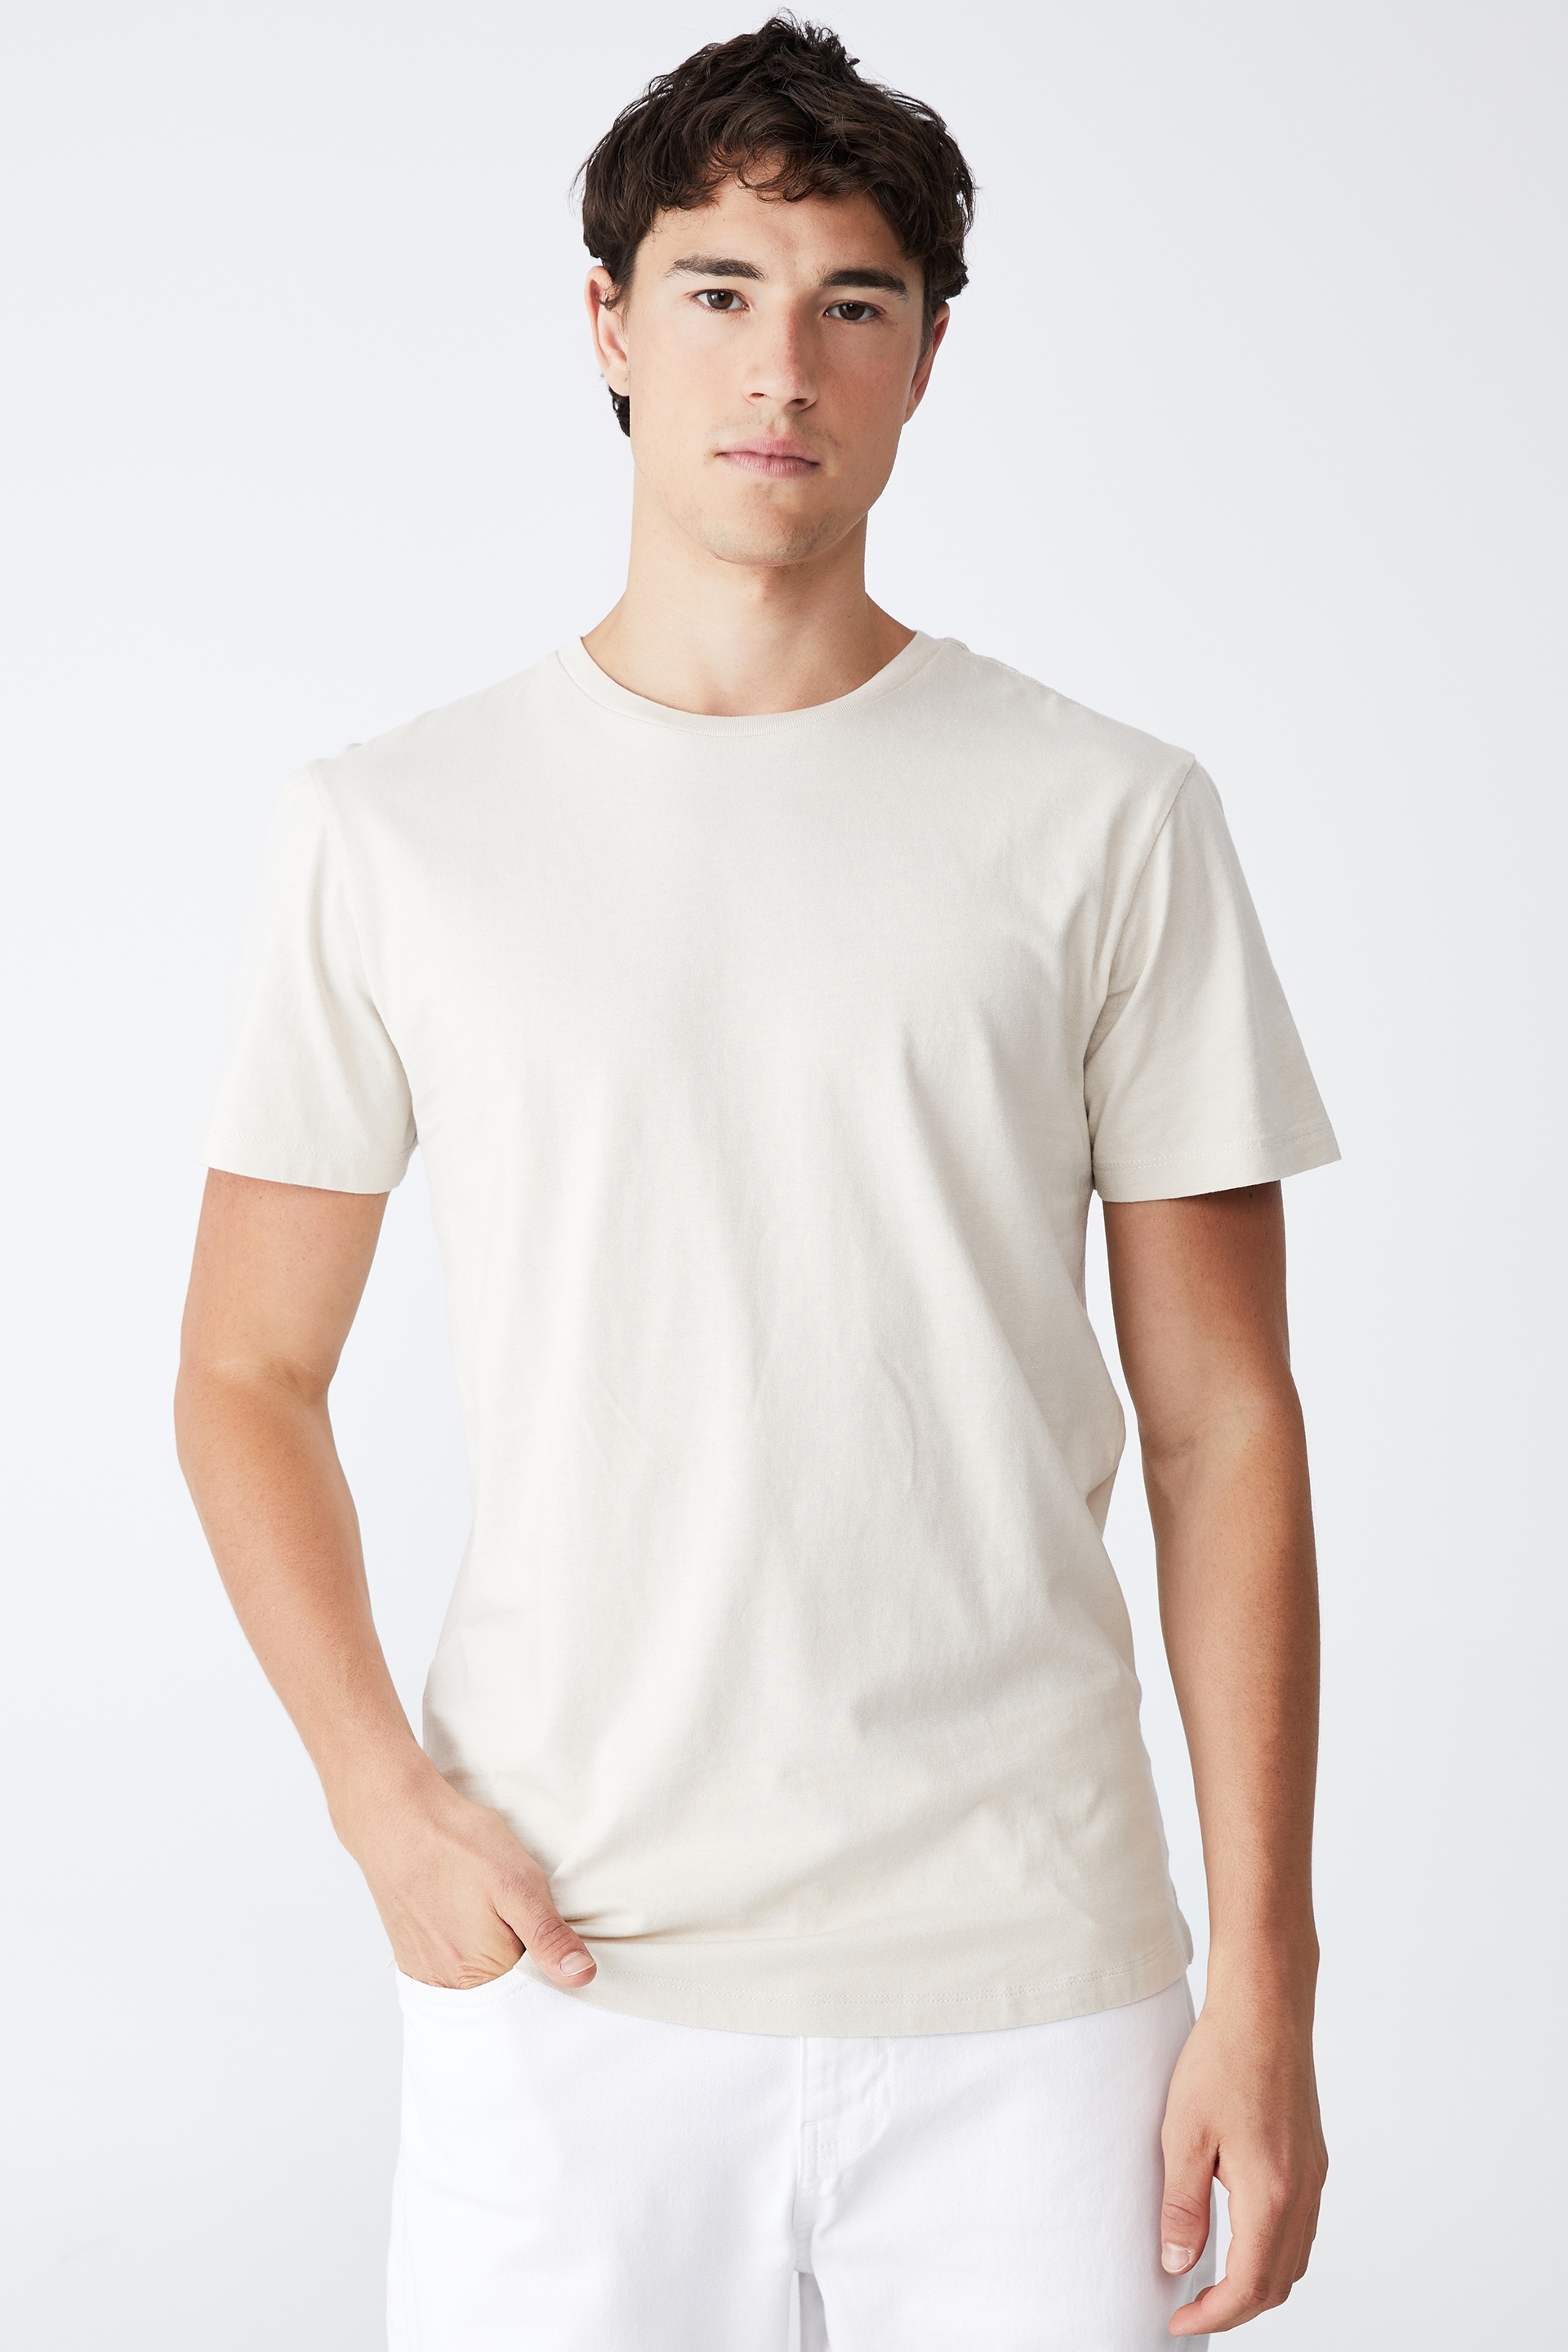 Cotton On Men - Organic Longline T-Shirt - Bone